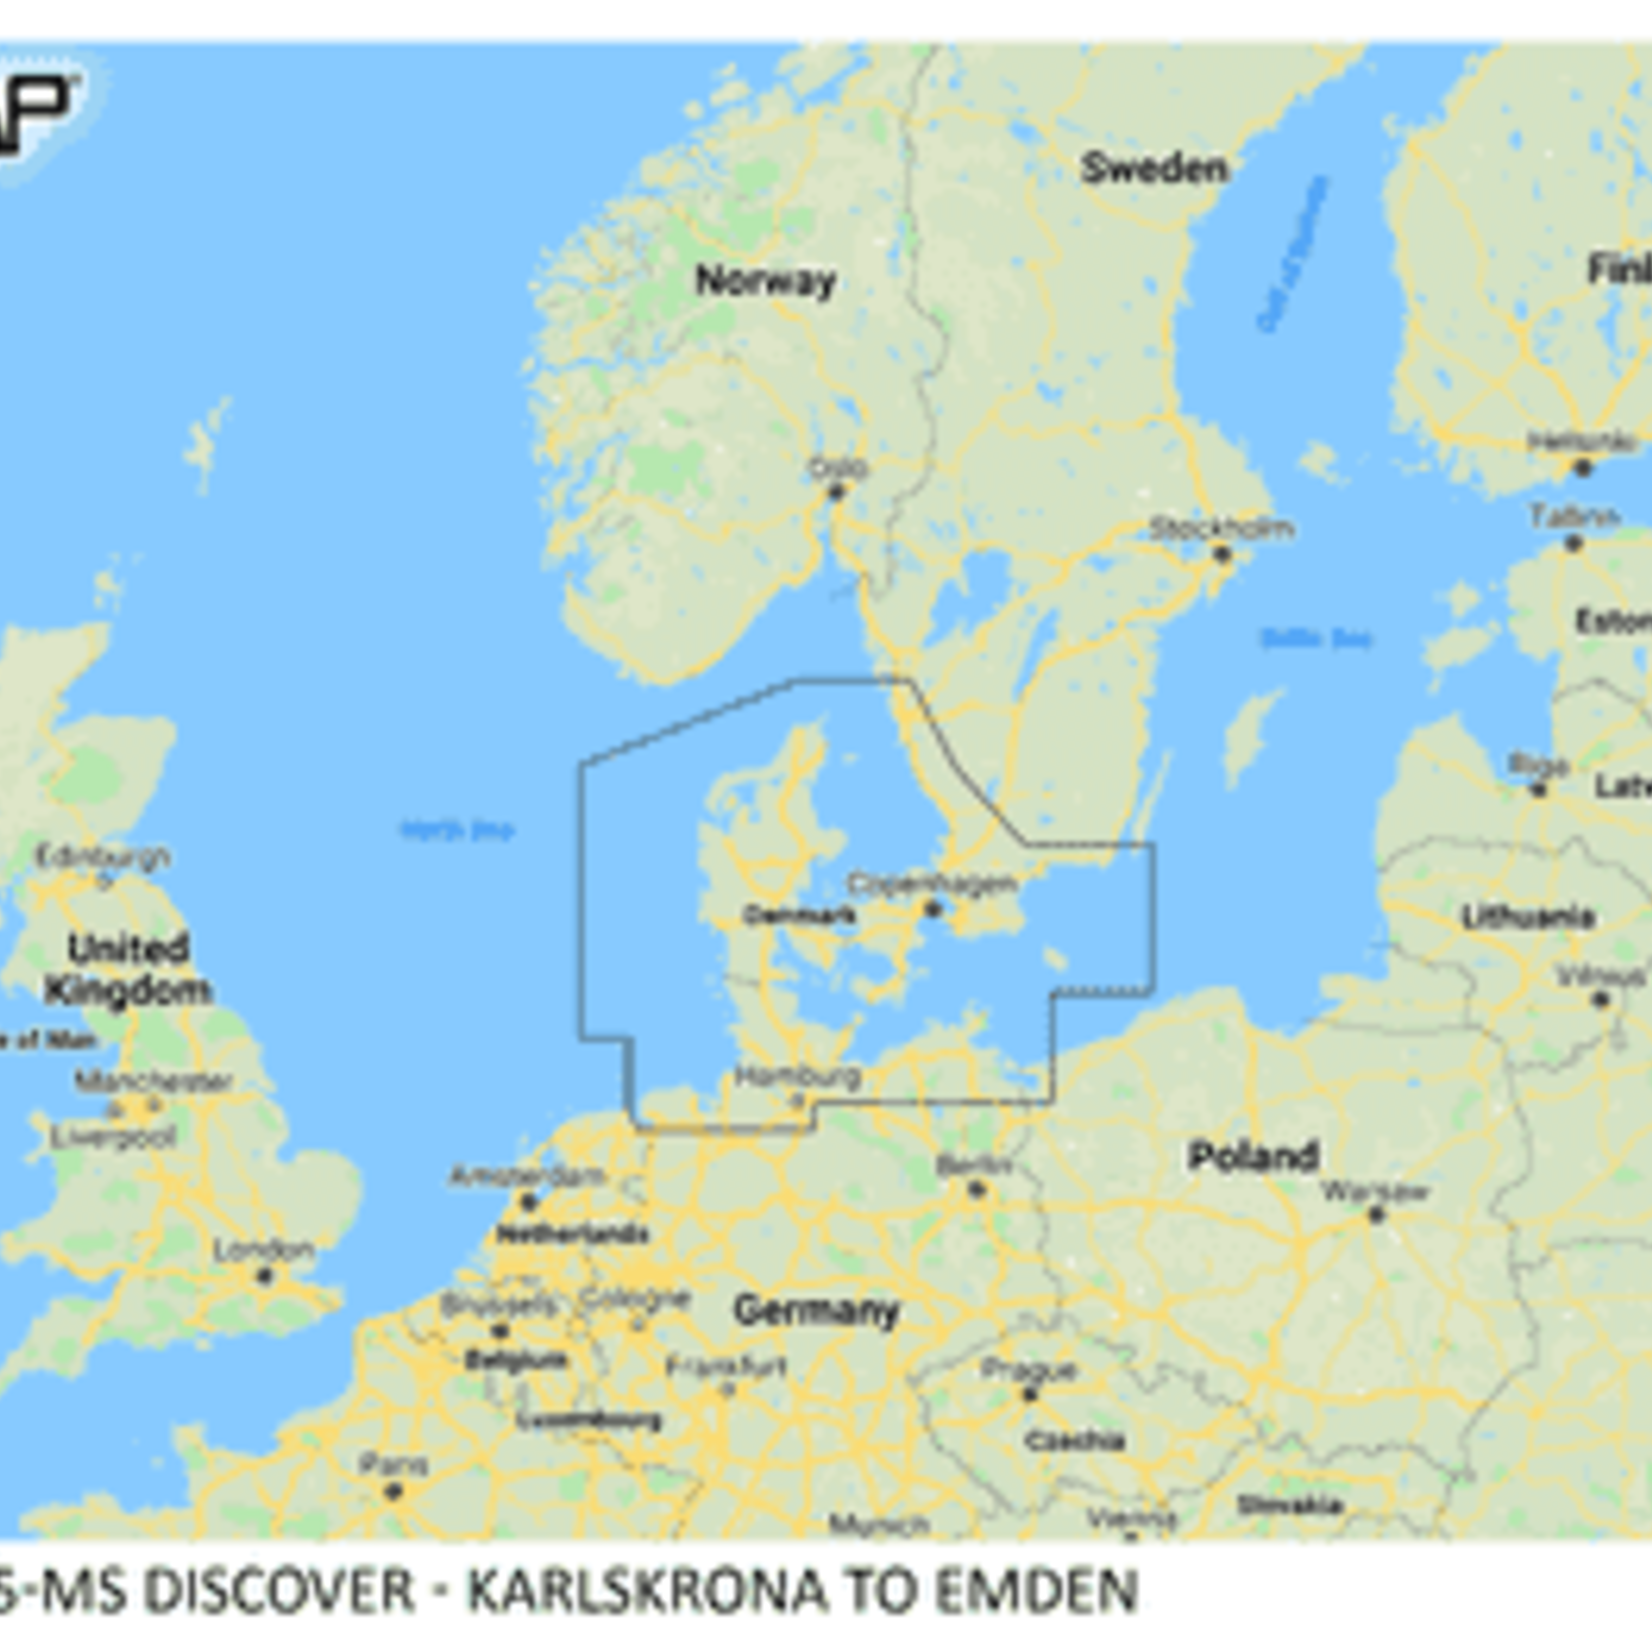 C-MAP DISCOVER - Karlskrona to Emden